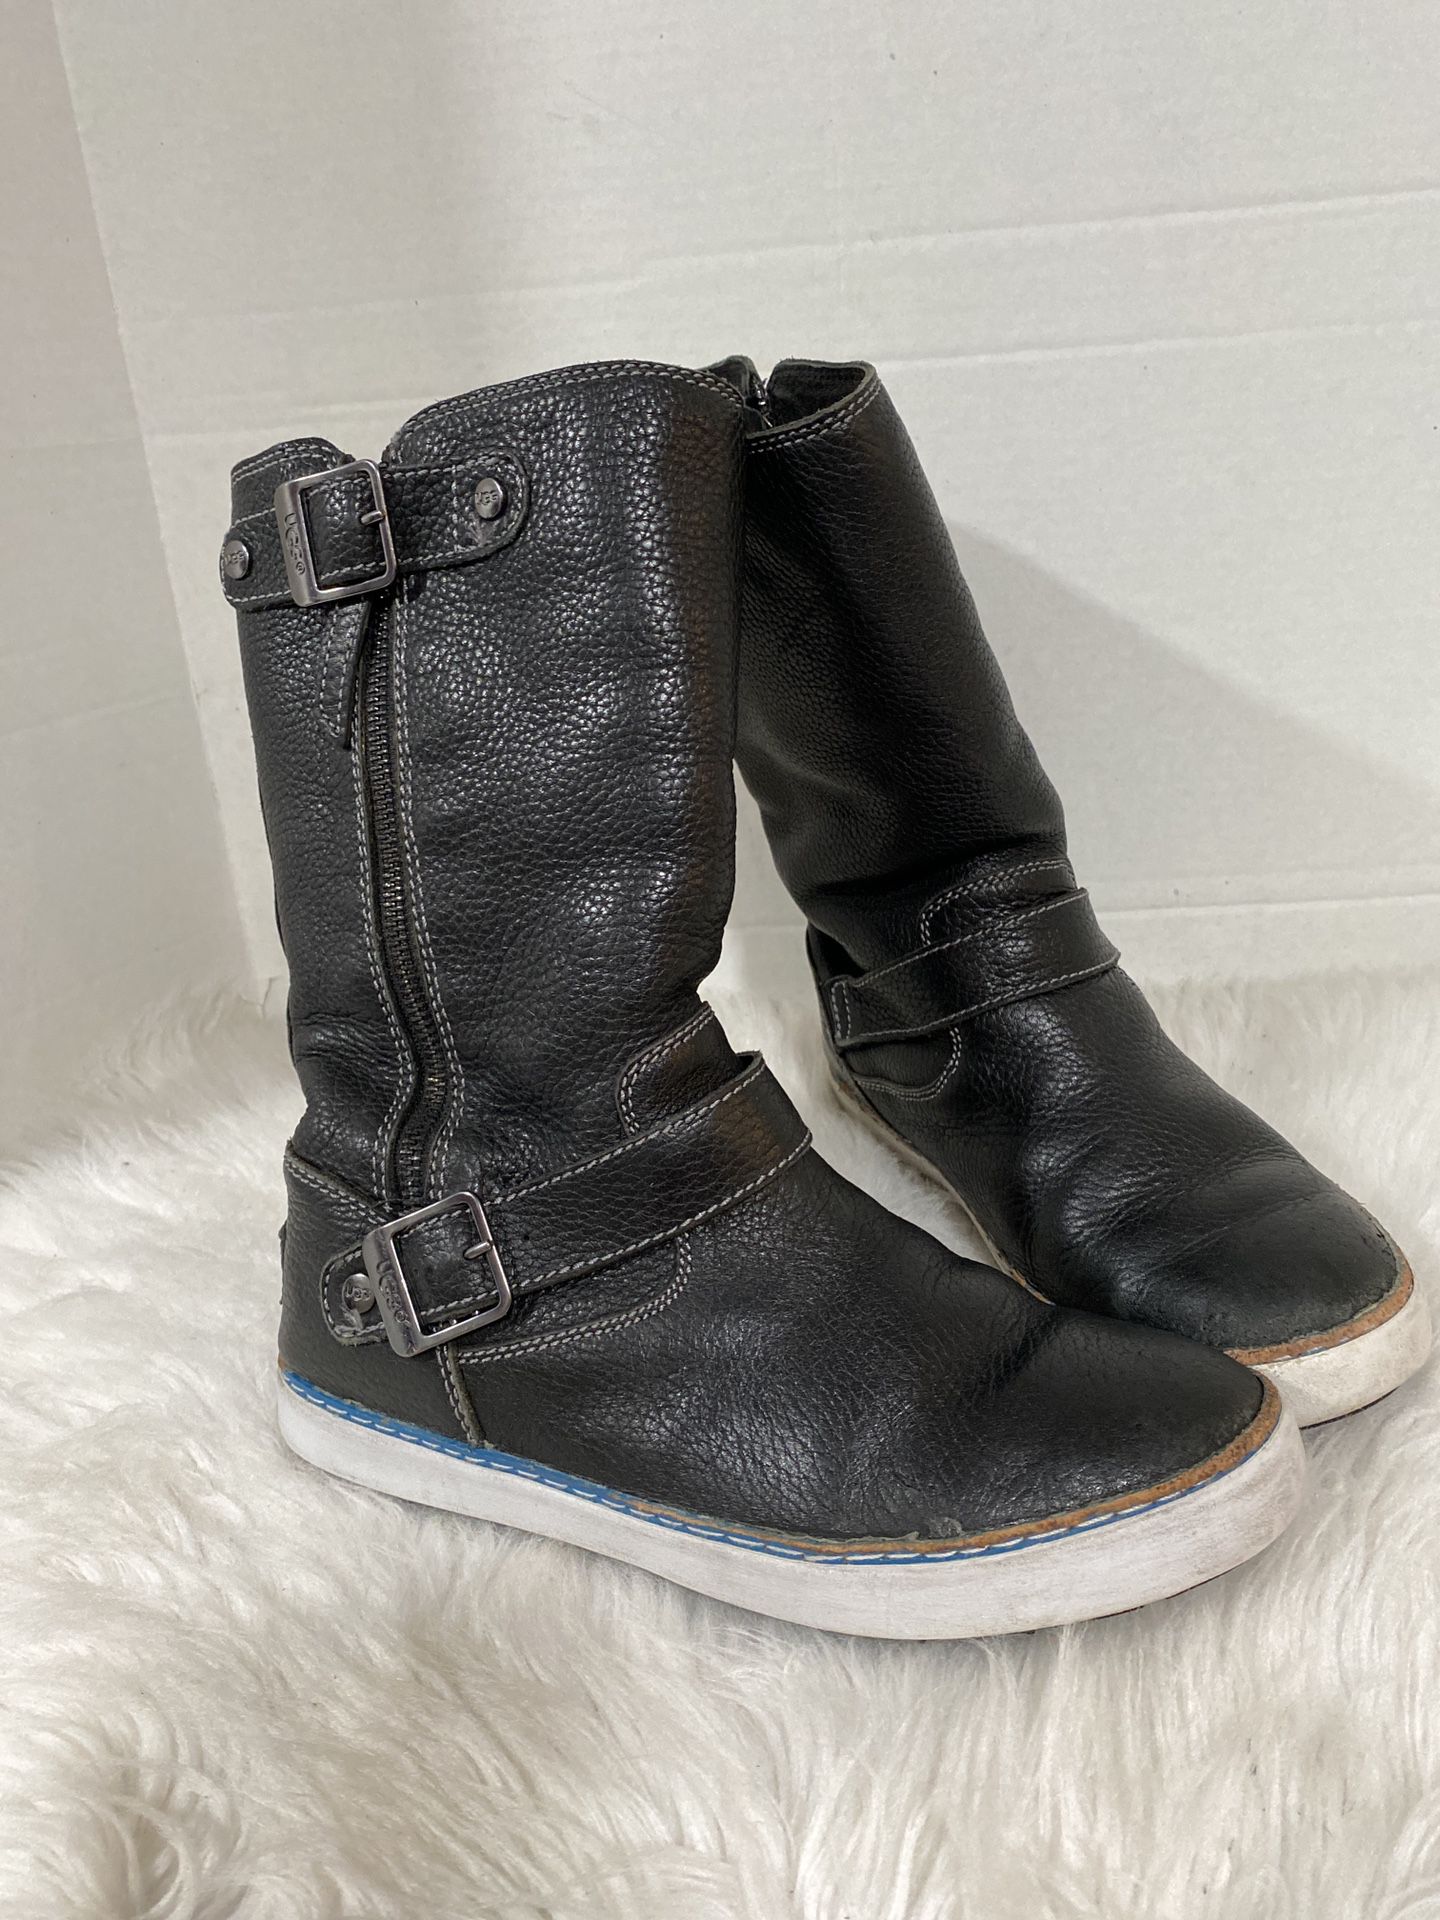 UGG Australia Andra Black Leather Mid Calf Women Boots Size 7.5